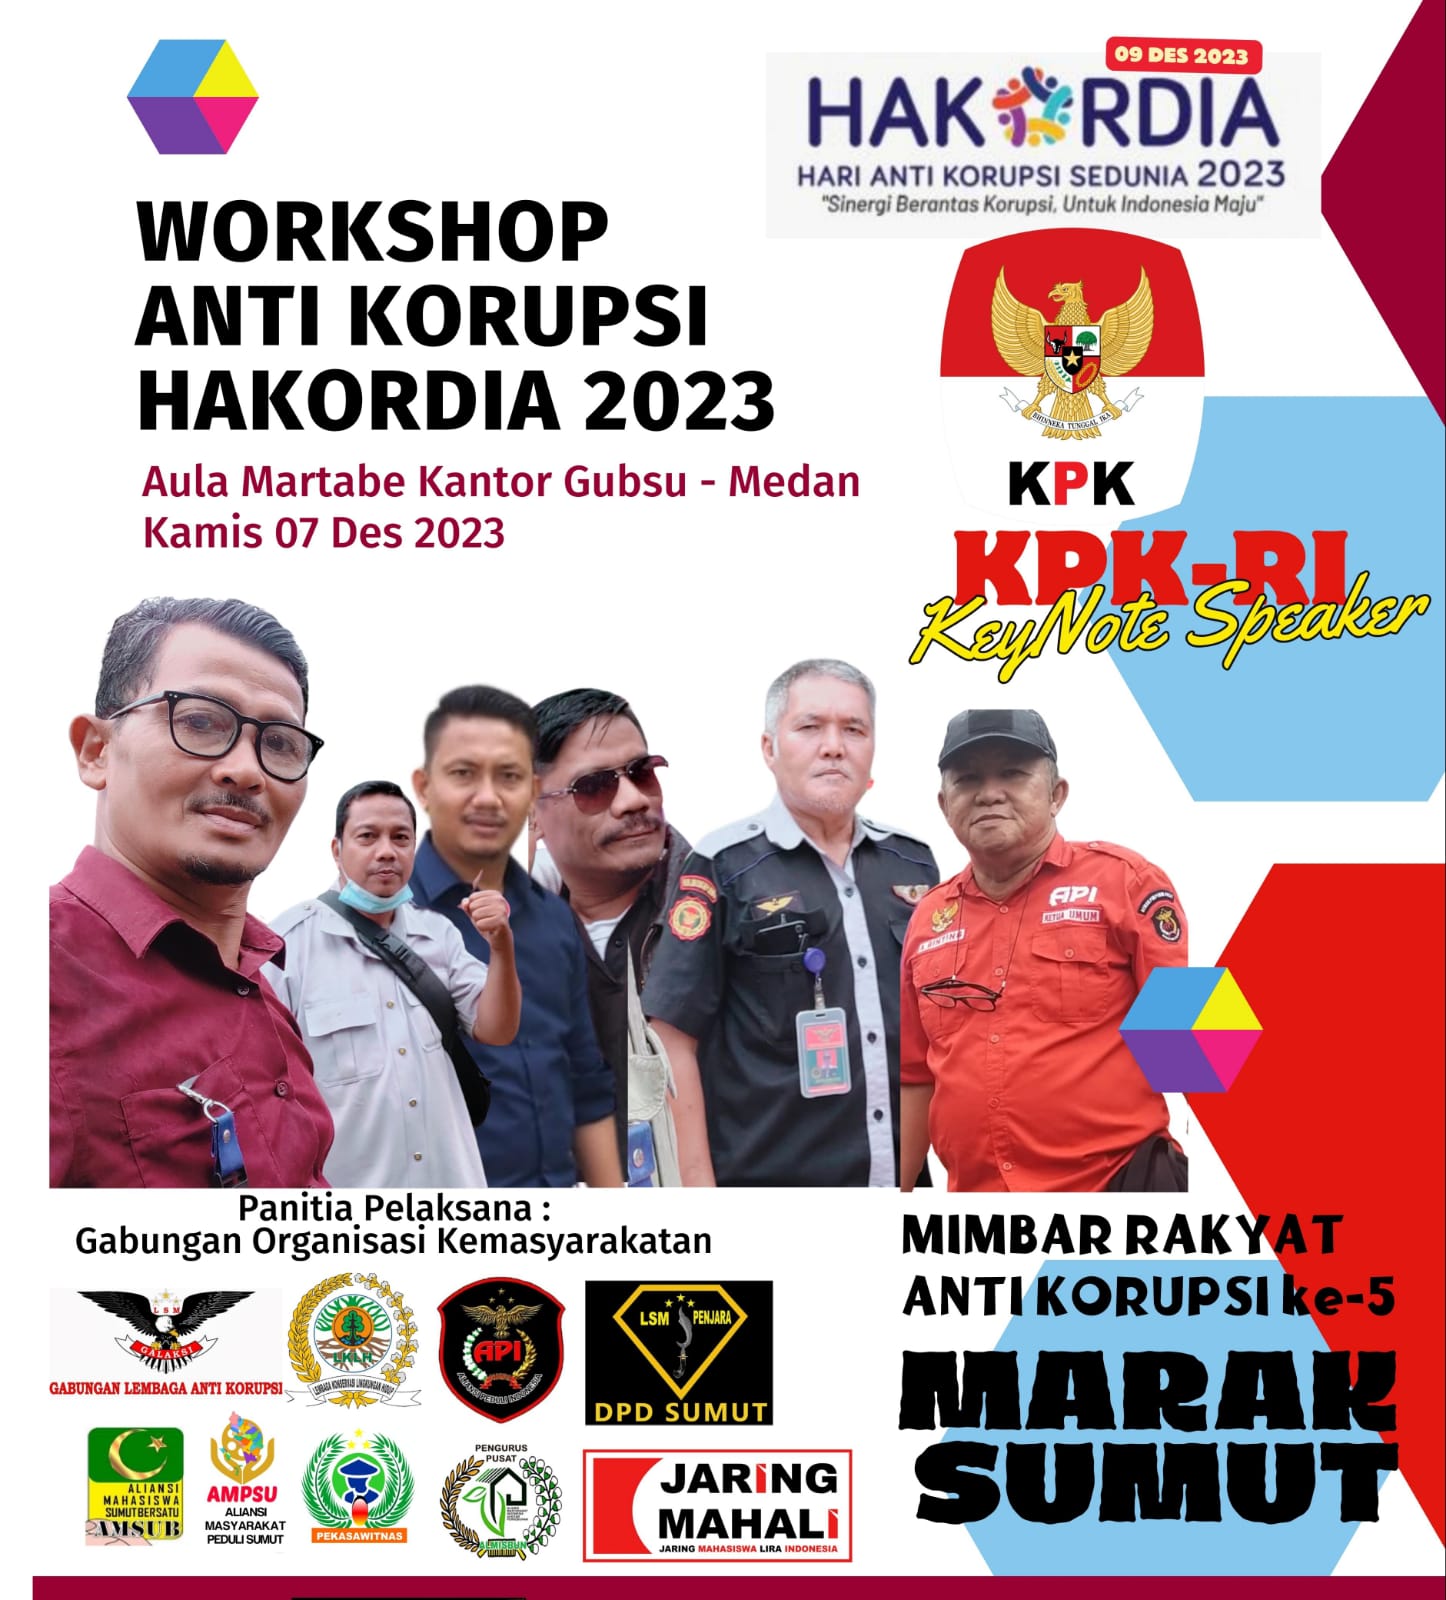 Presidum MARAK SUMUT Bersama KPK Untuk Work Shop HARKODIA 2023